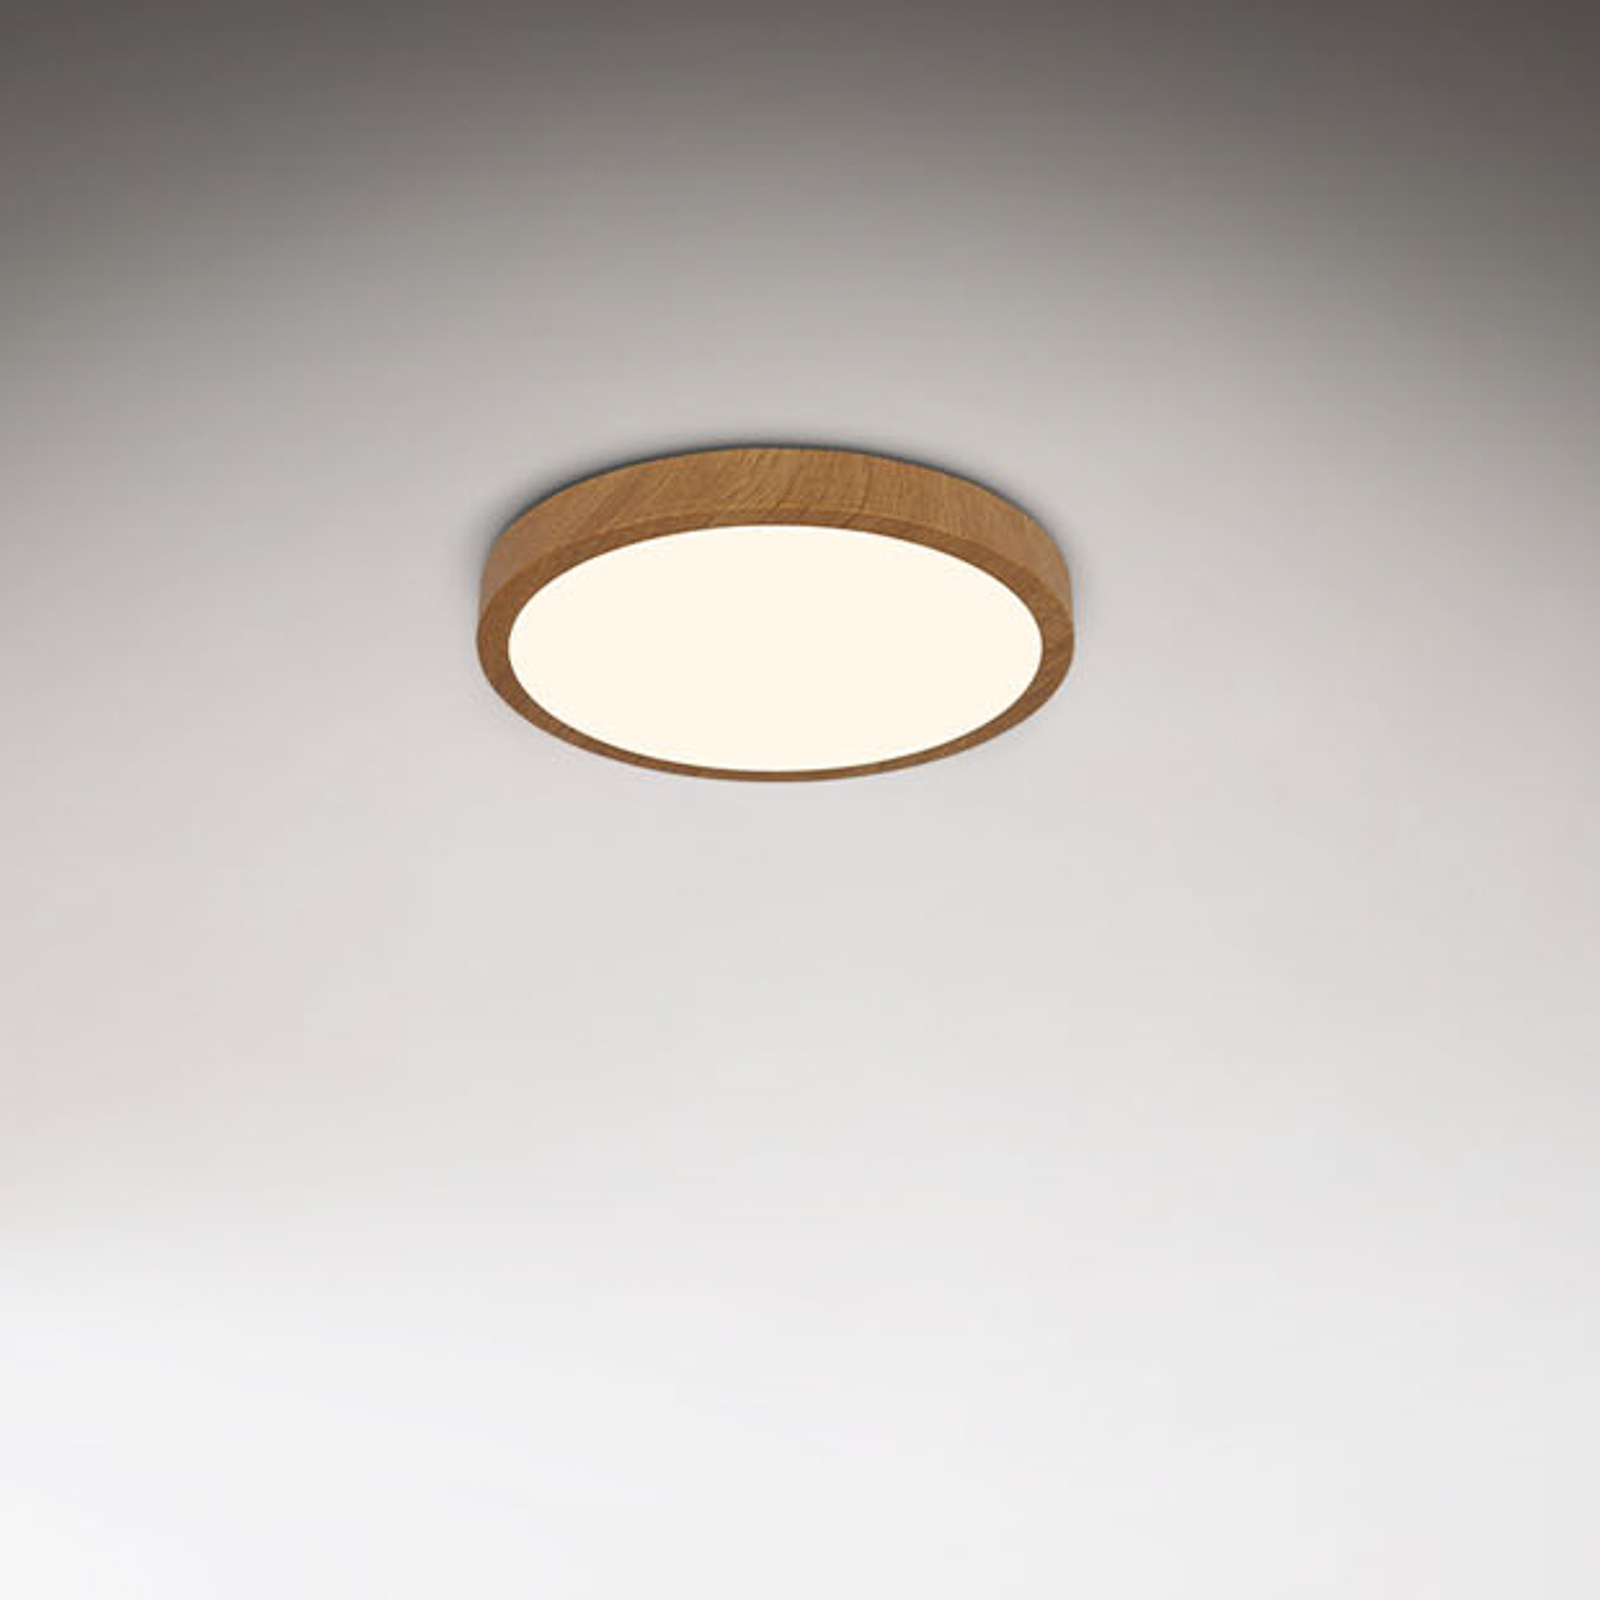 LED ceiling lamp Runa Wood wood look 3,000 K Ø28cm